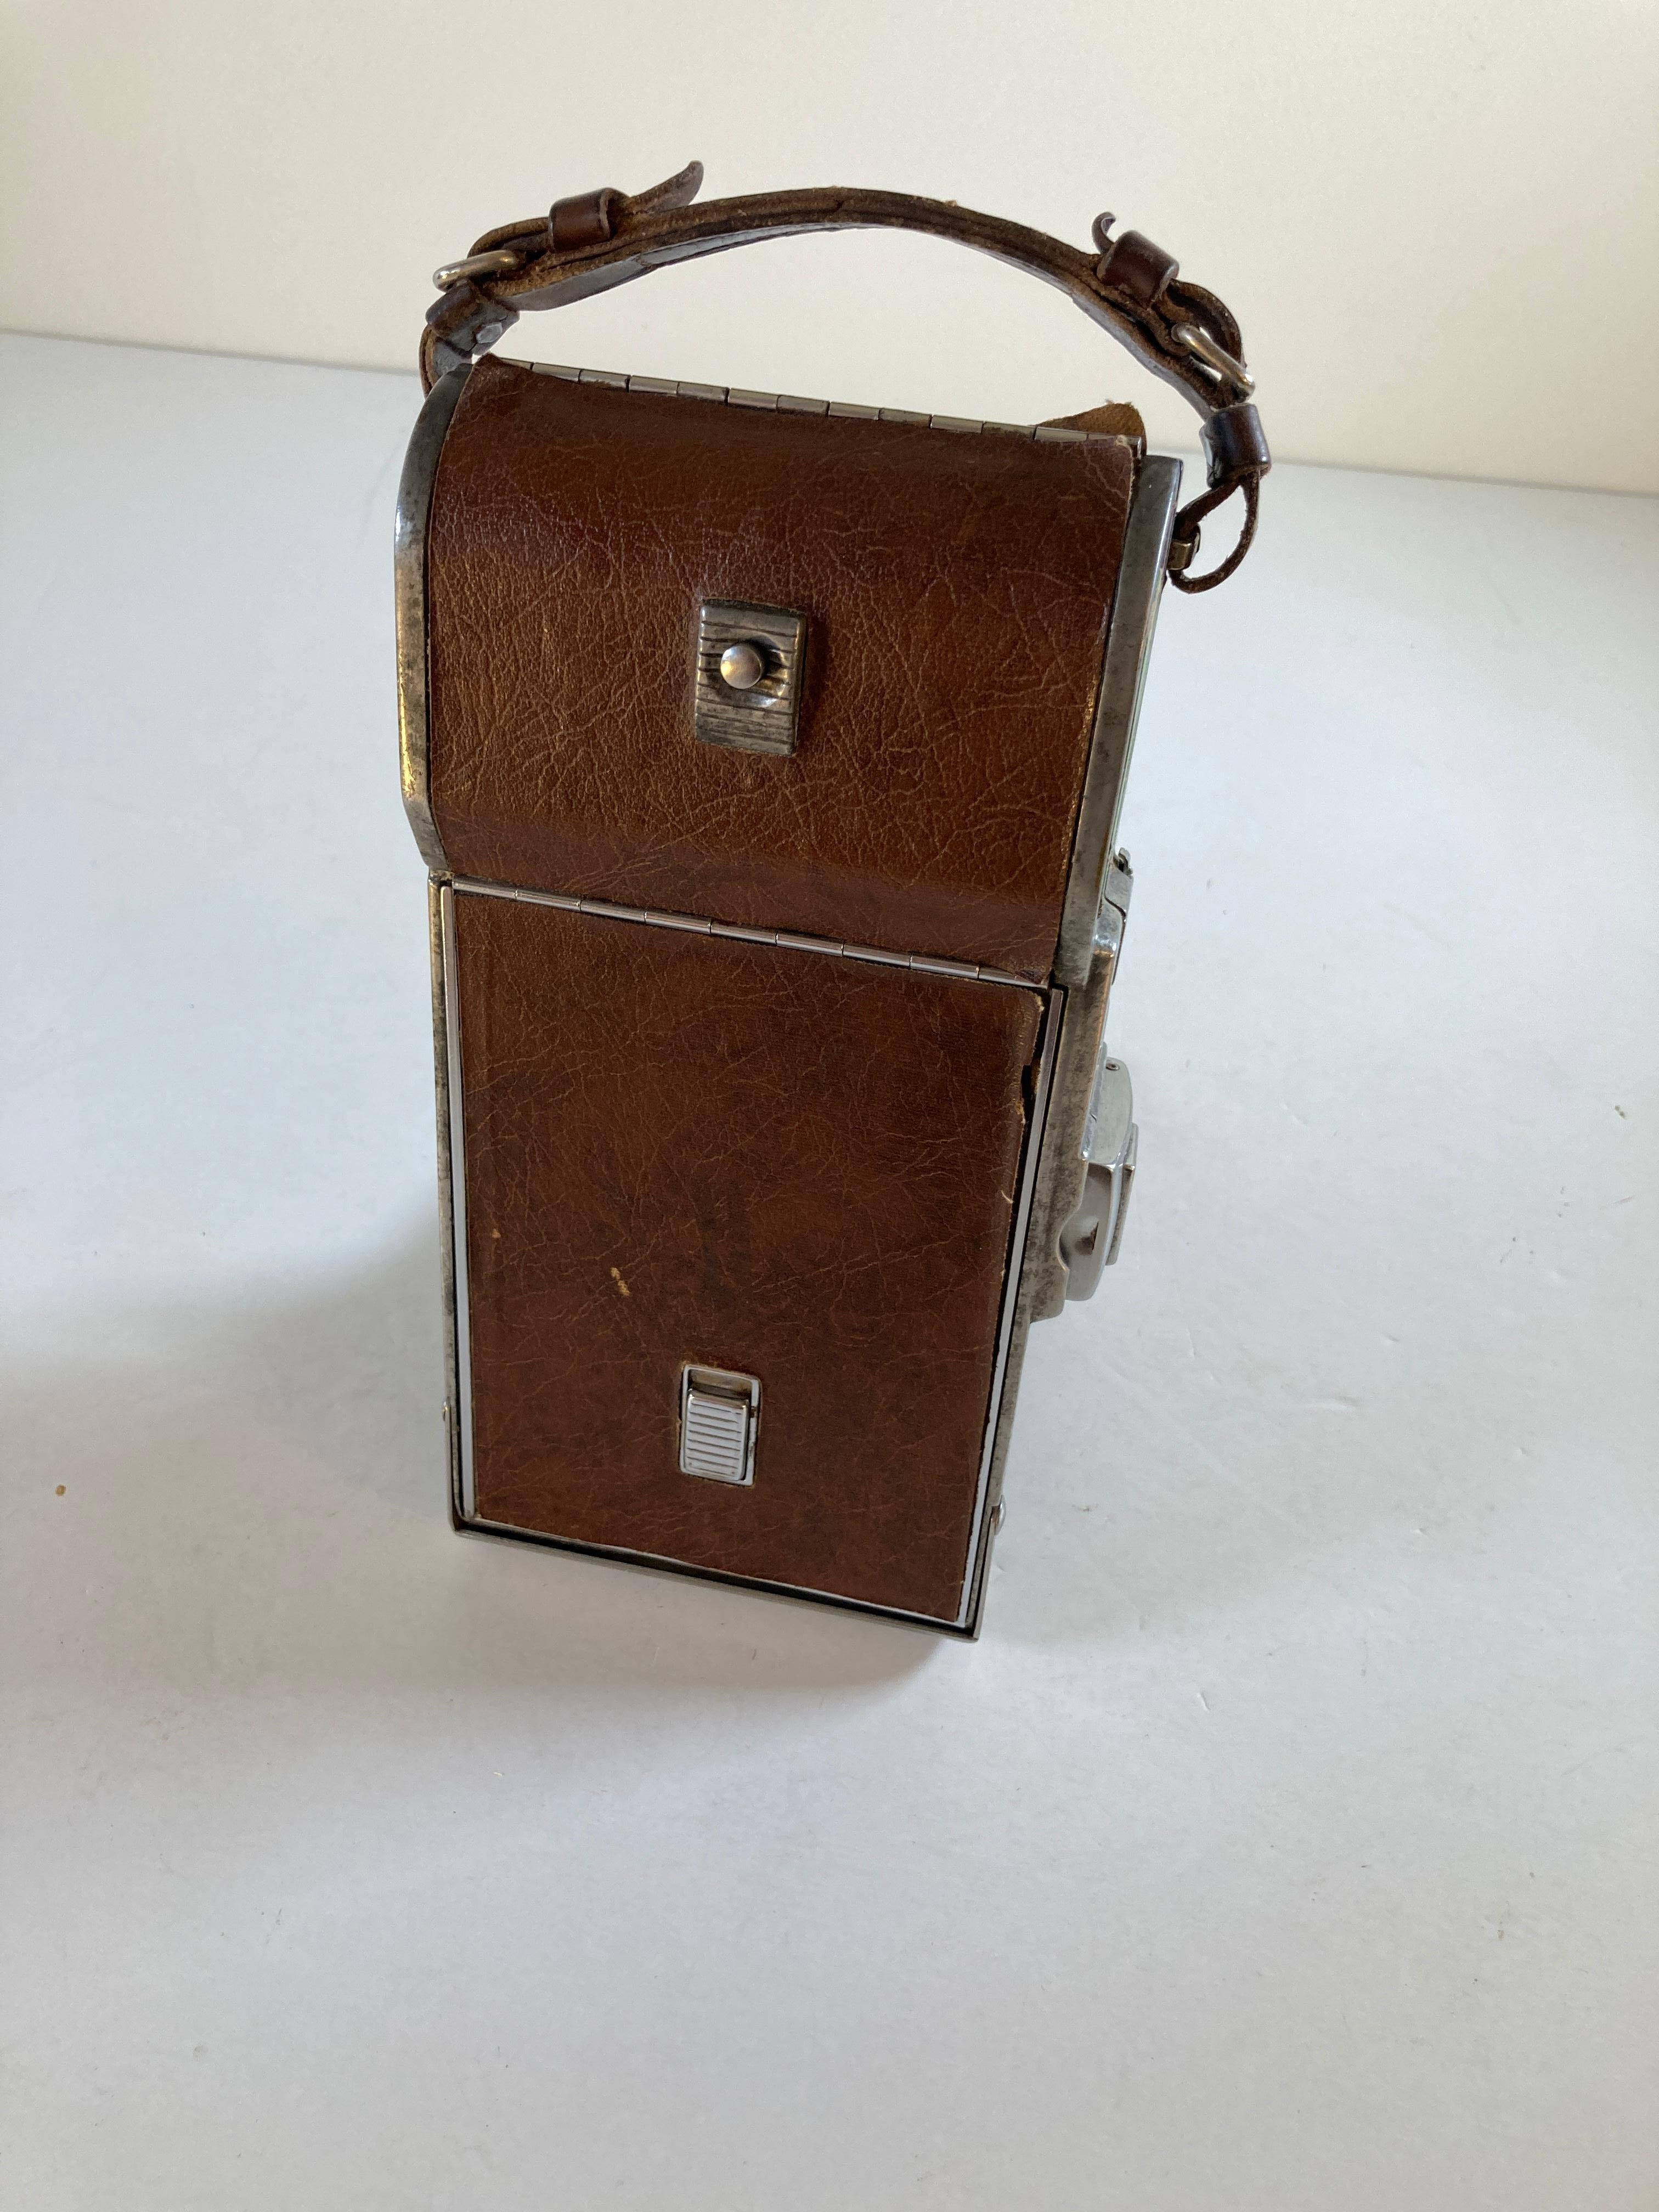 Metal Vintage Polaroid Land Camera in Case Model 95, circa 1948